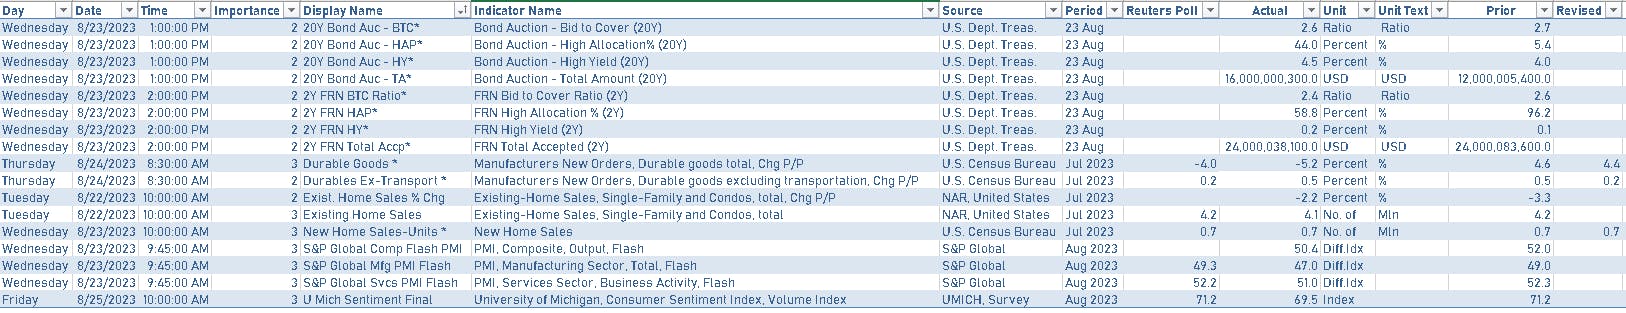 US economic data Last week | Sources: phipost.com, Refinitiv data